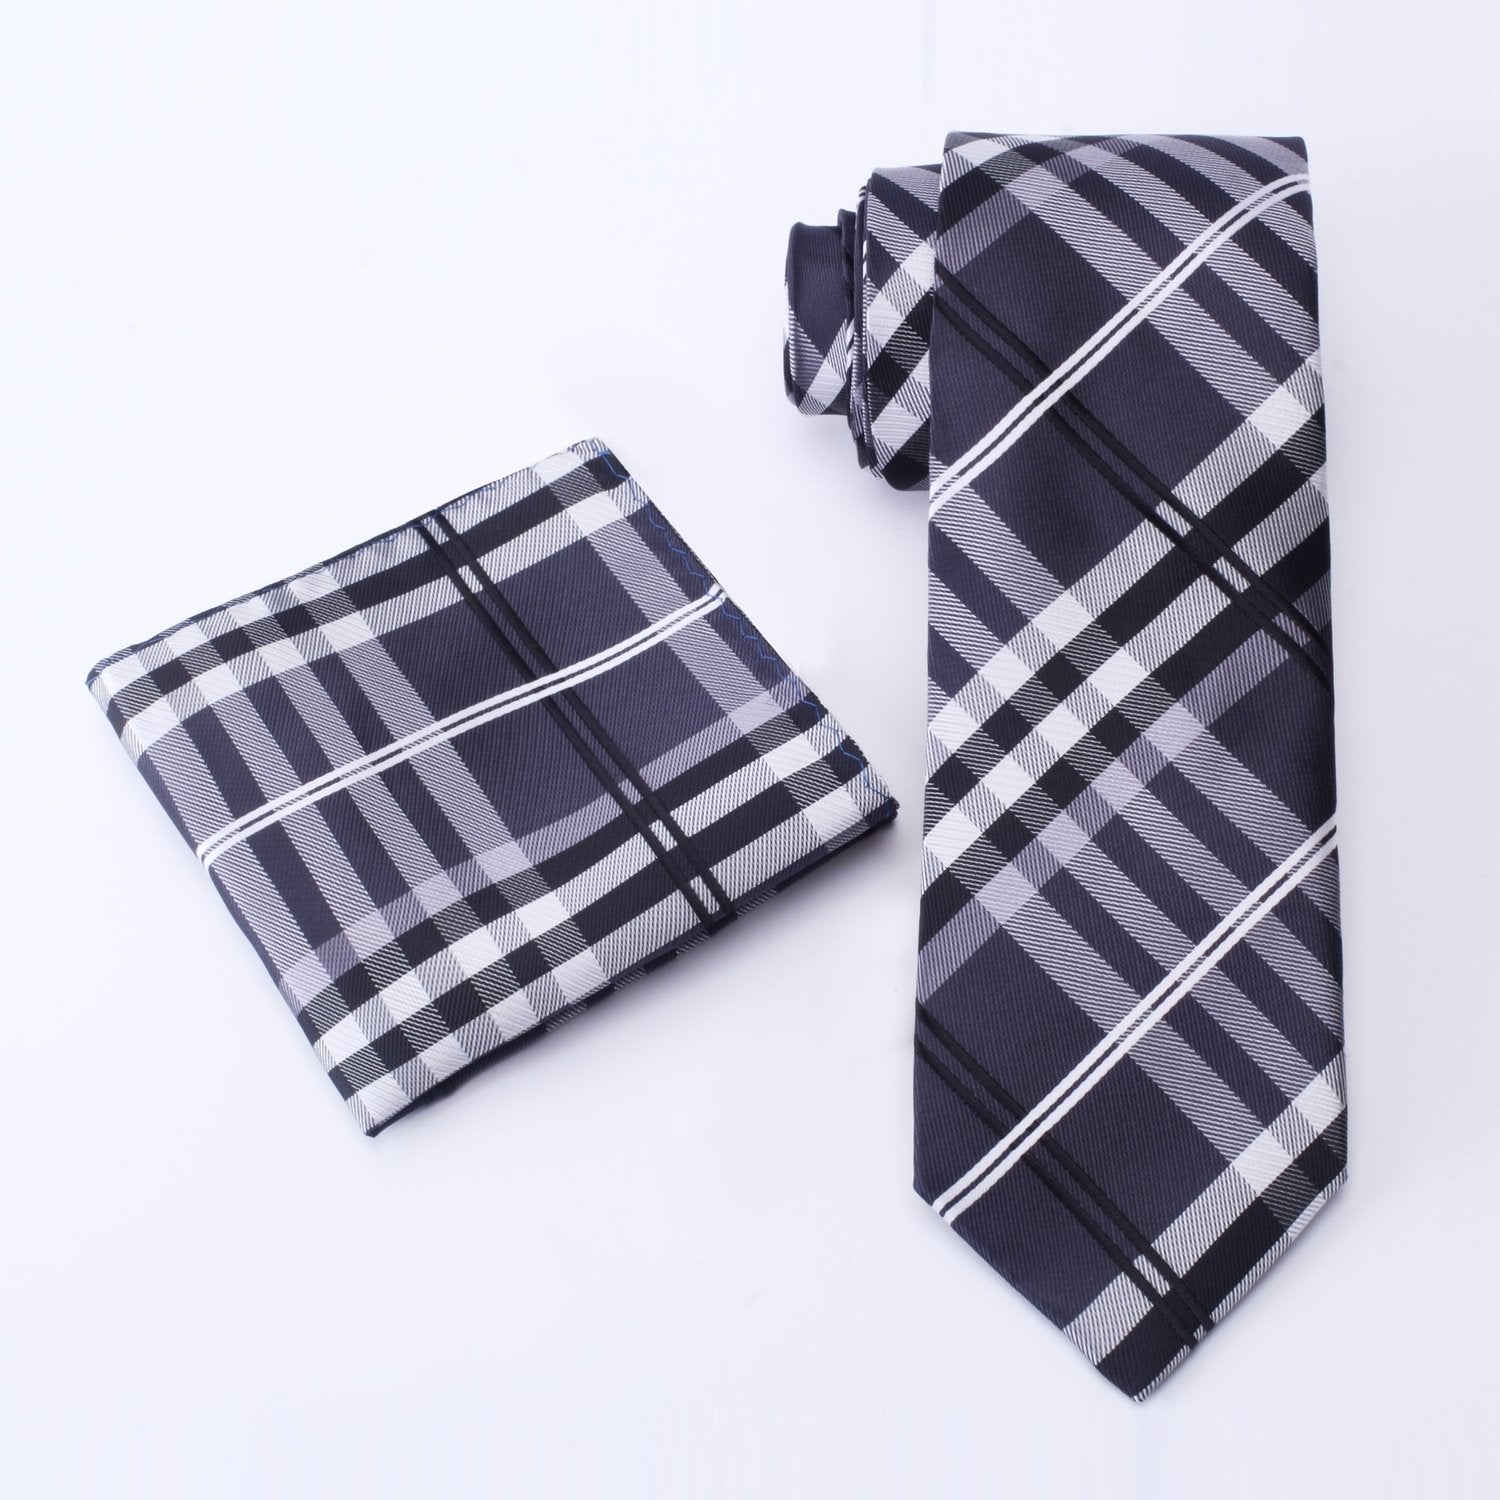 Alt view: A Black, Grey, White Plaid Pattern Necktie and Pocket Square